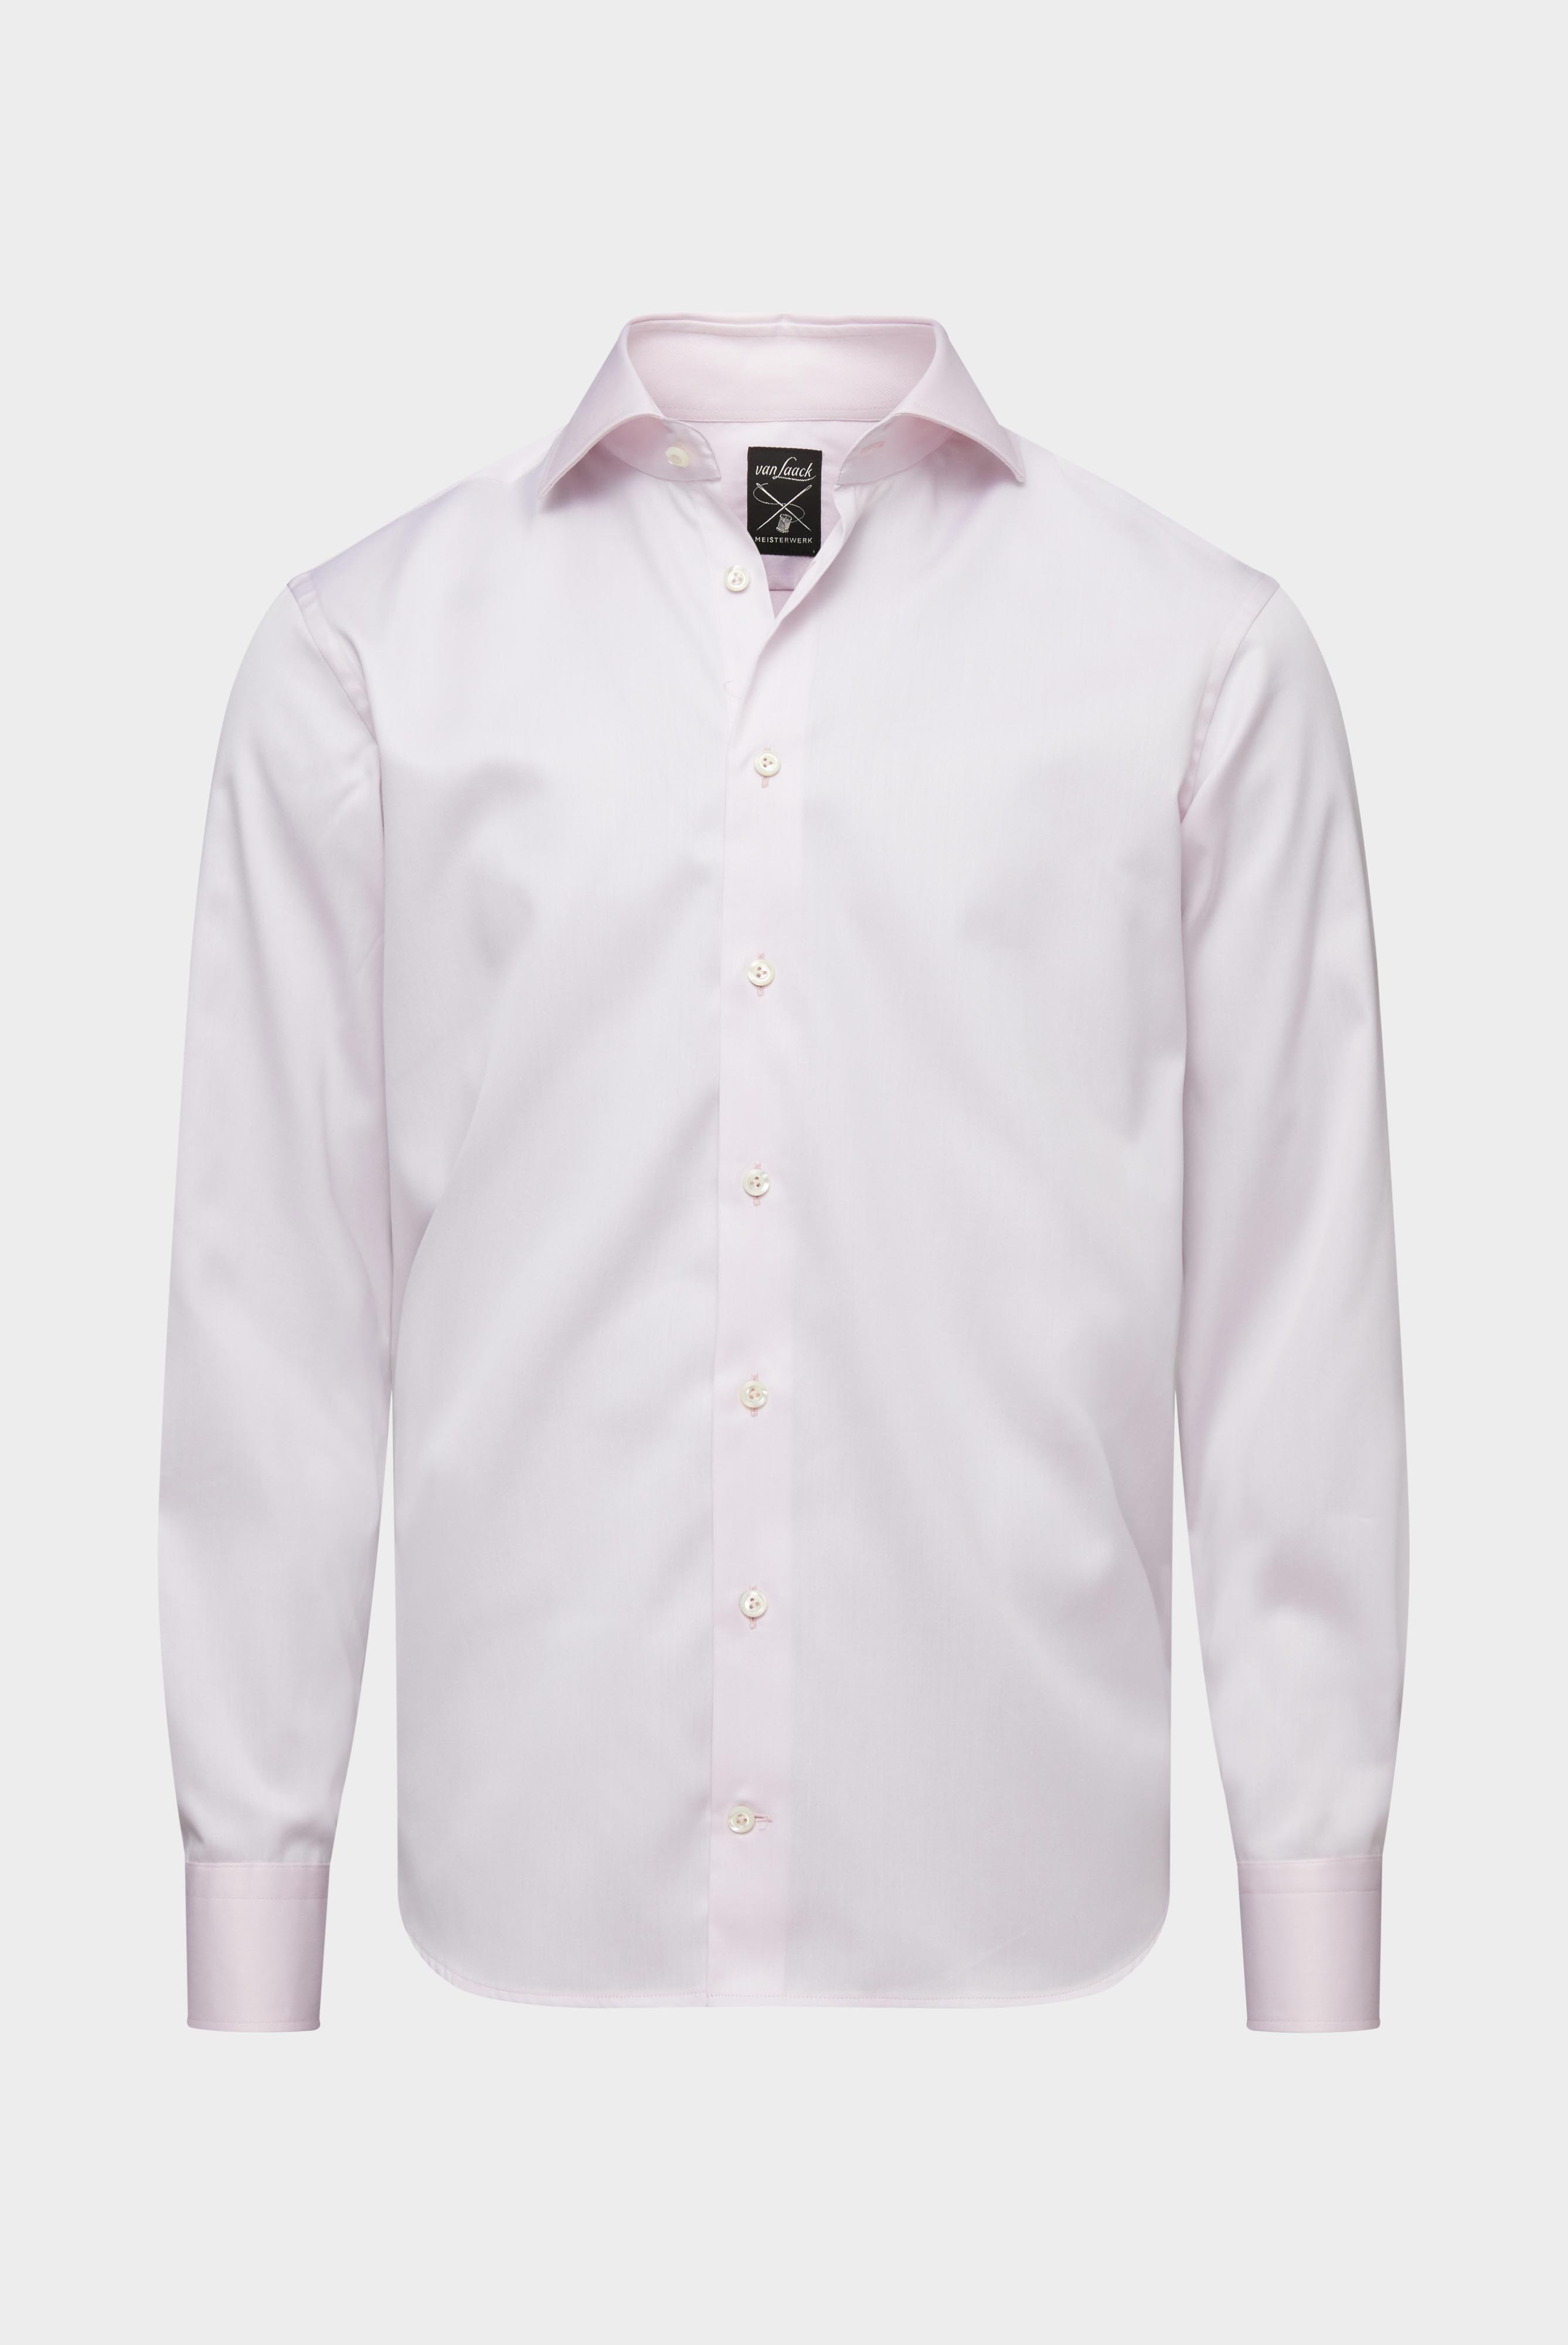 Easy Iron Shirts+Wrinkle-Free Twill Shirt+20.2020.BQ.132241.510.37